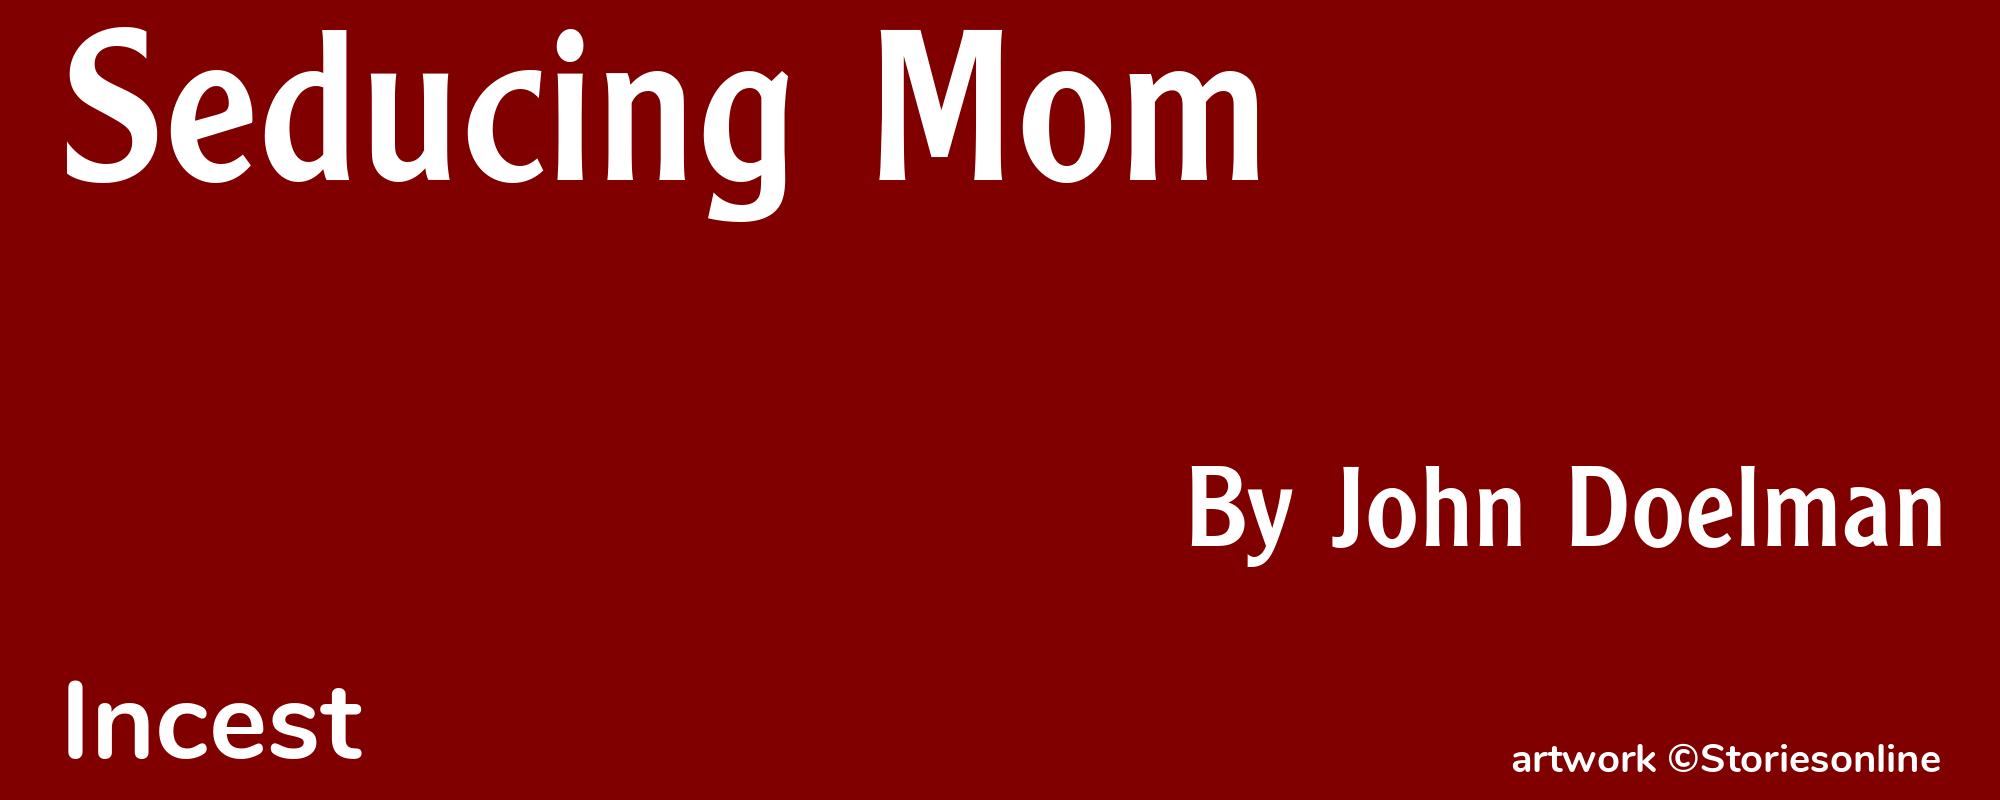 Seducing Mom - Cover